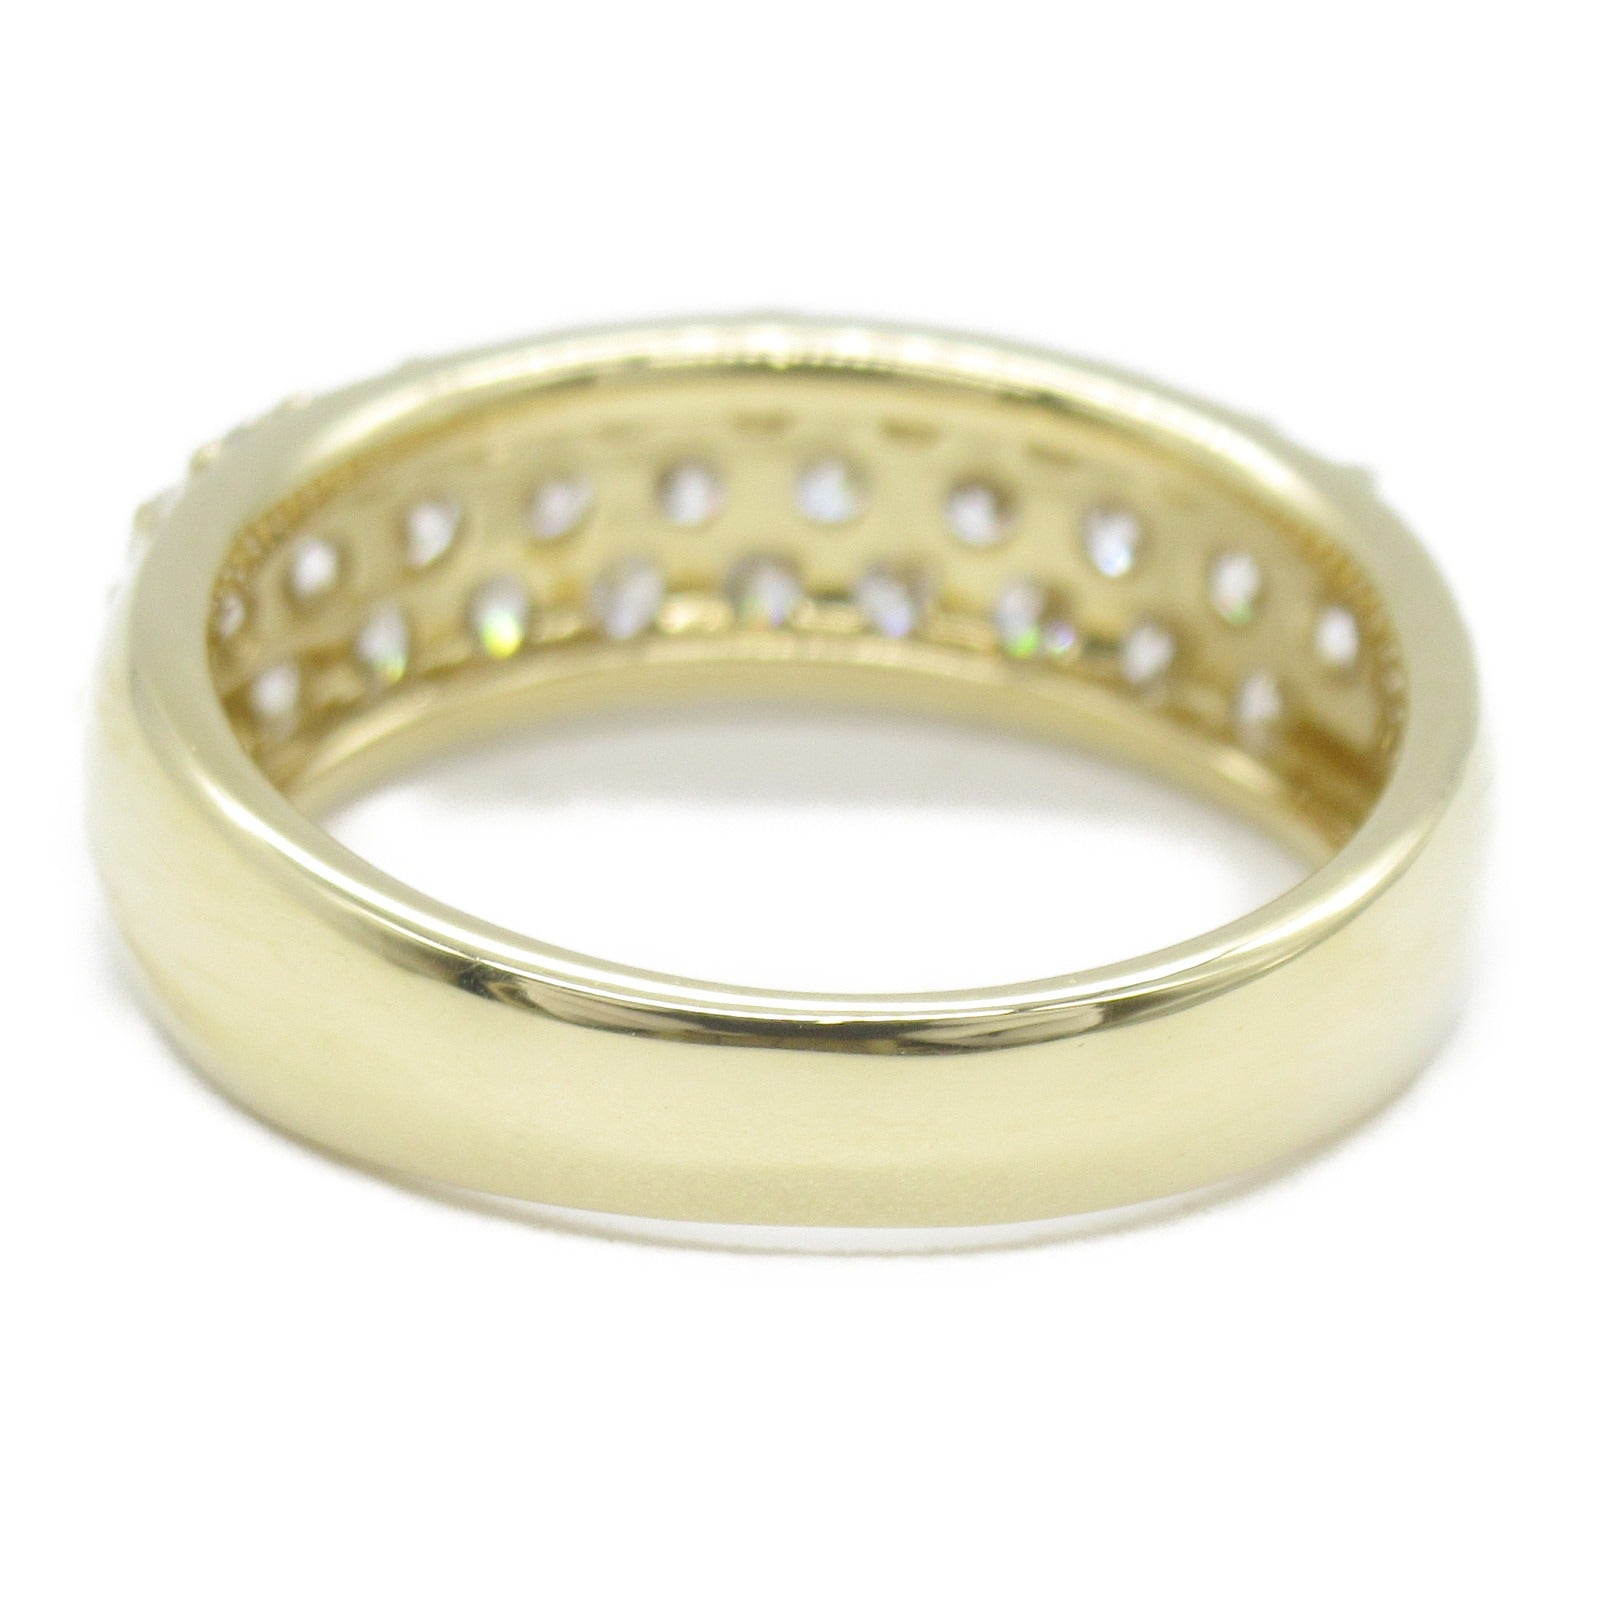 Jewelry Jewelry Diamond Ring Ring Ring Jewelry K18 (yellow g) Diamond  Clear Diamond 5.3g